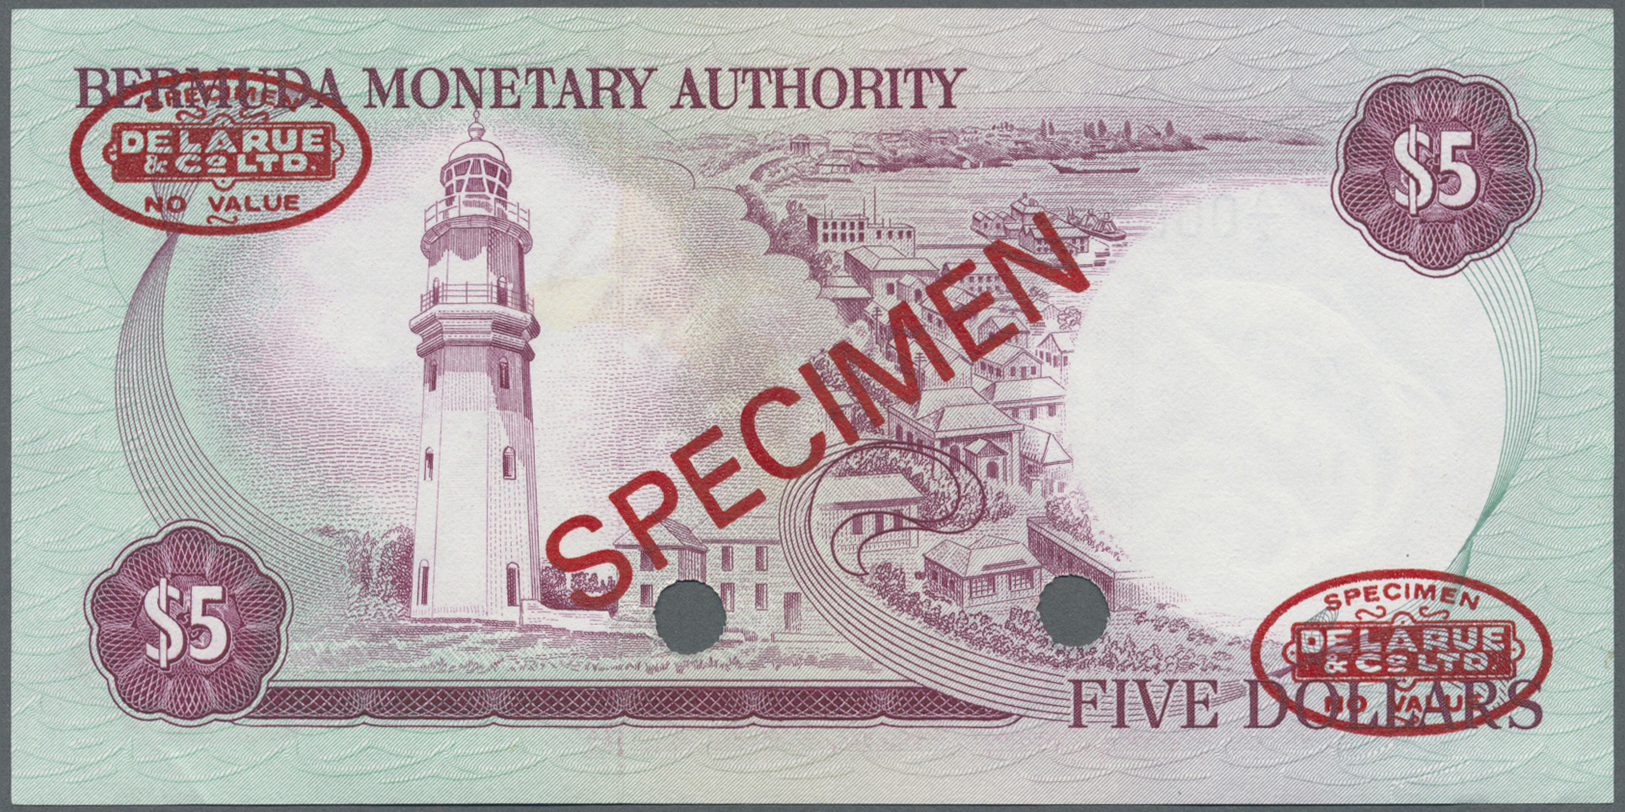 00302 Bermuda: 5 Dollars 1981 Specimen P. 29bs In Condition: XF+ To AUNC. - Bermudas